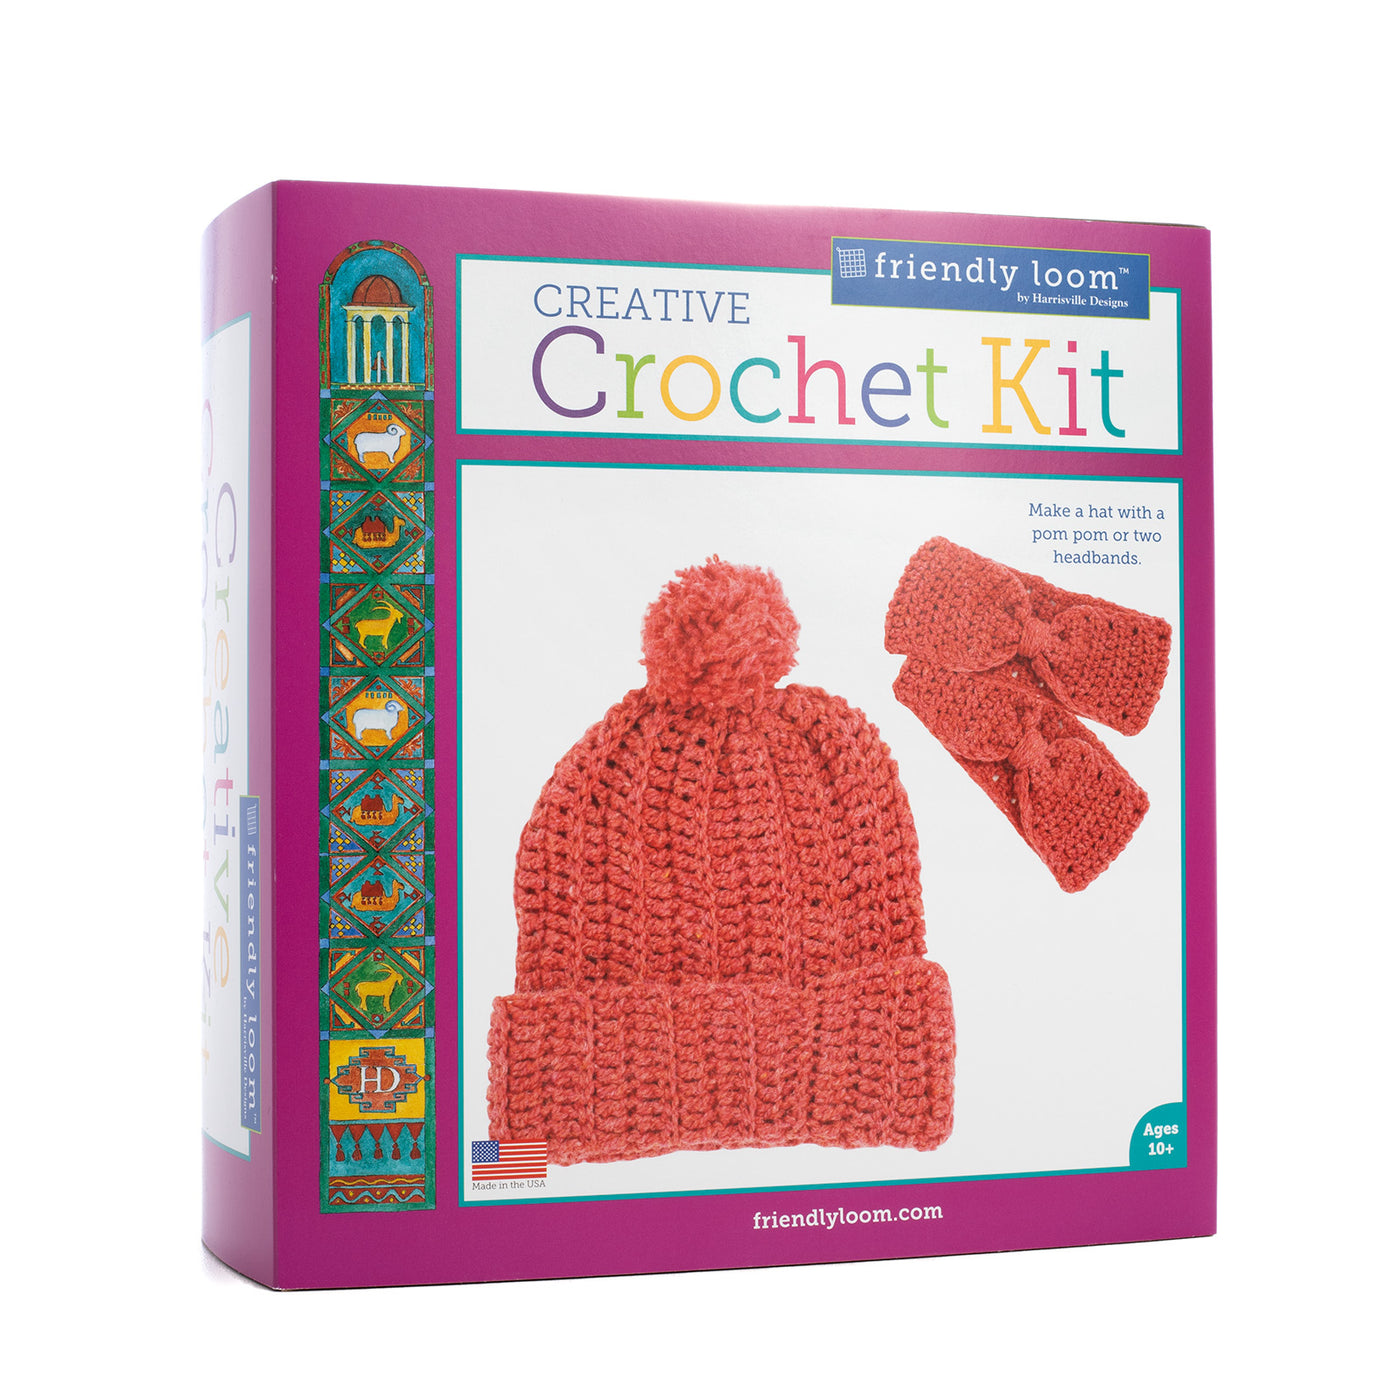 Creative Crochet Kit: RED